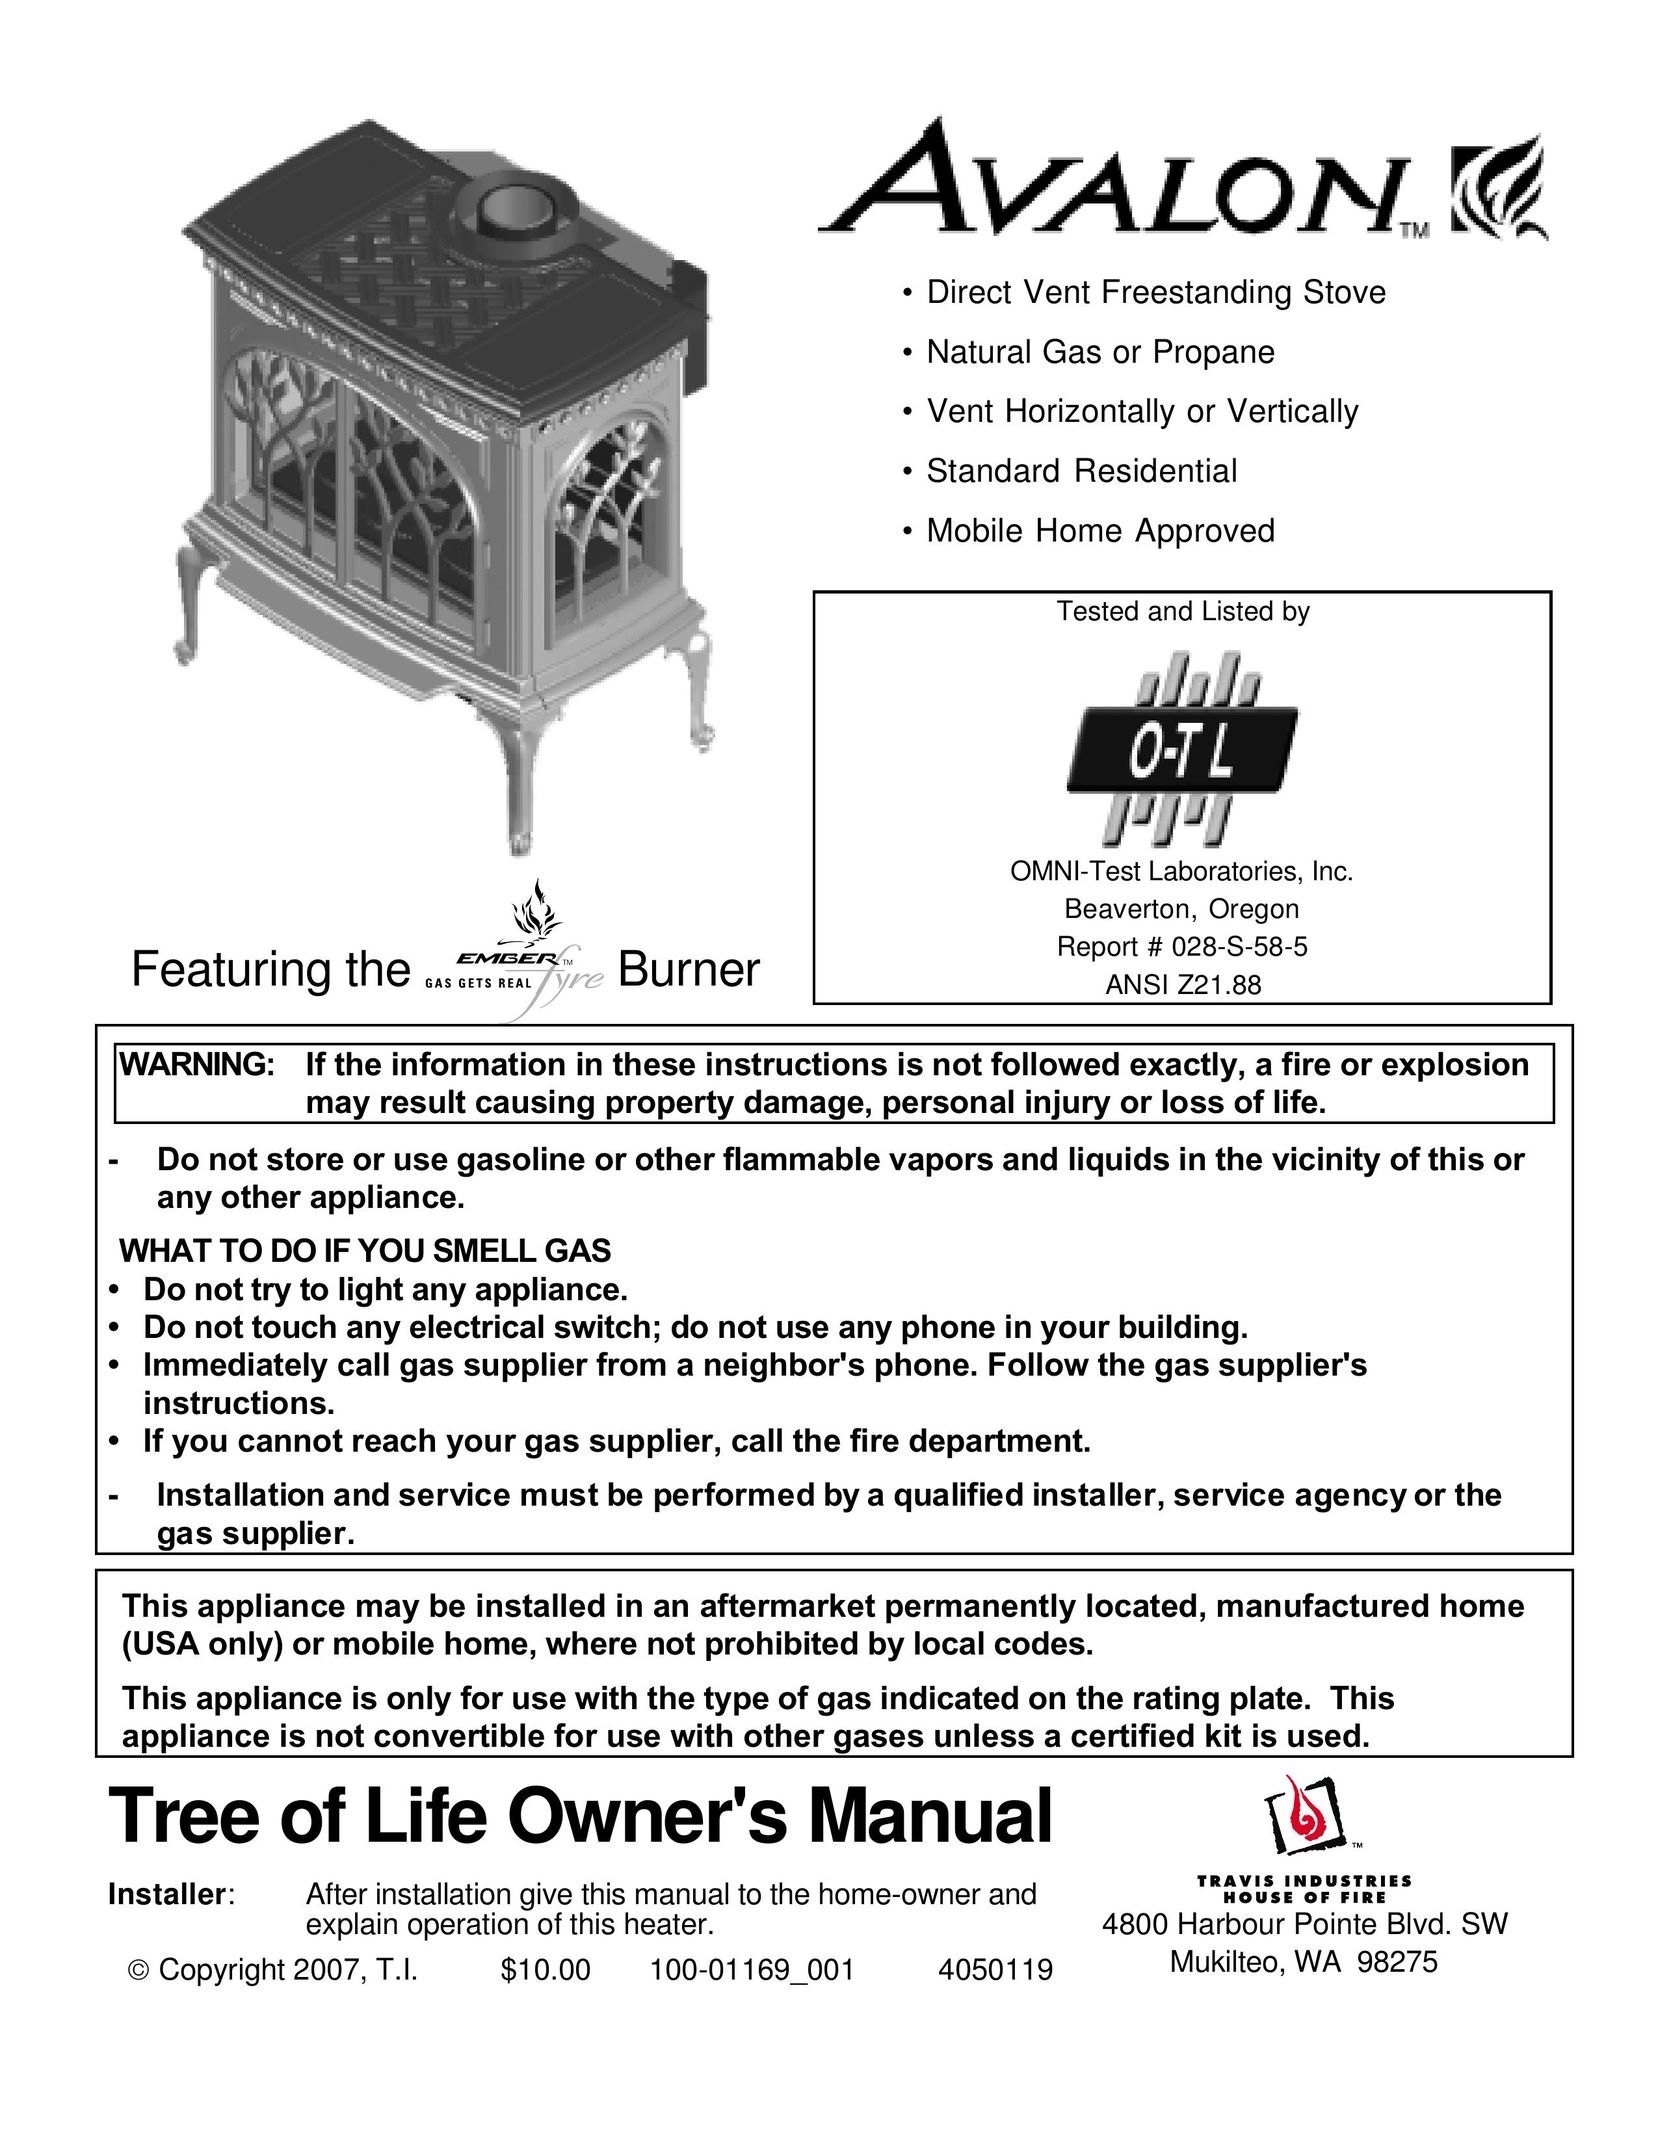 Avalon Stoves Direct Vent Freestanding Stove Stove User Manual